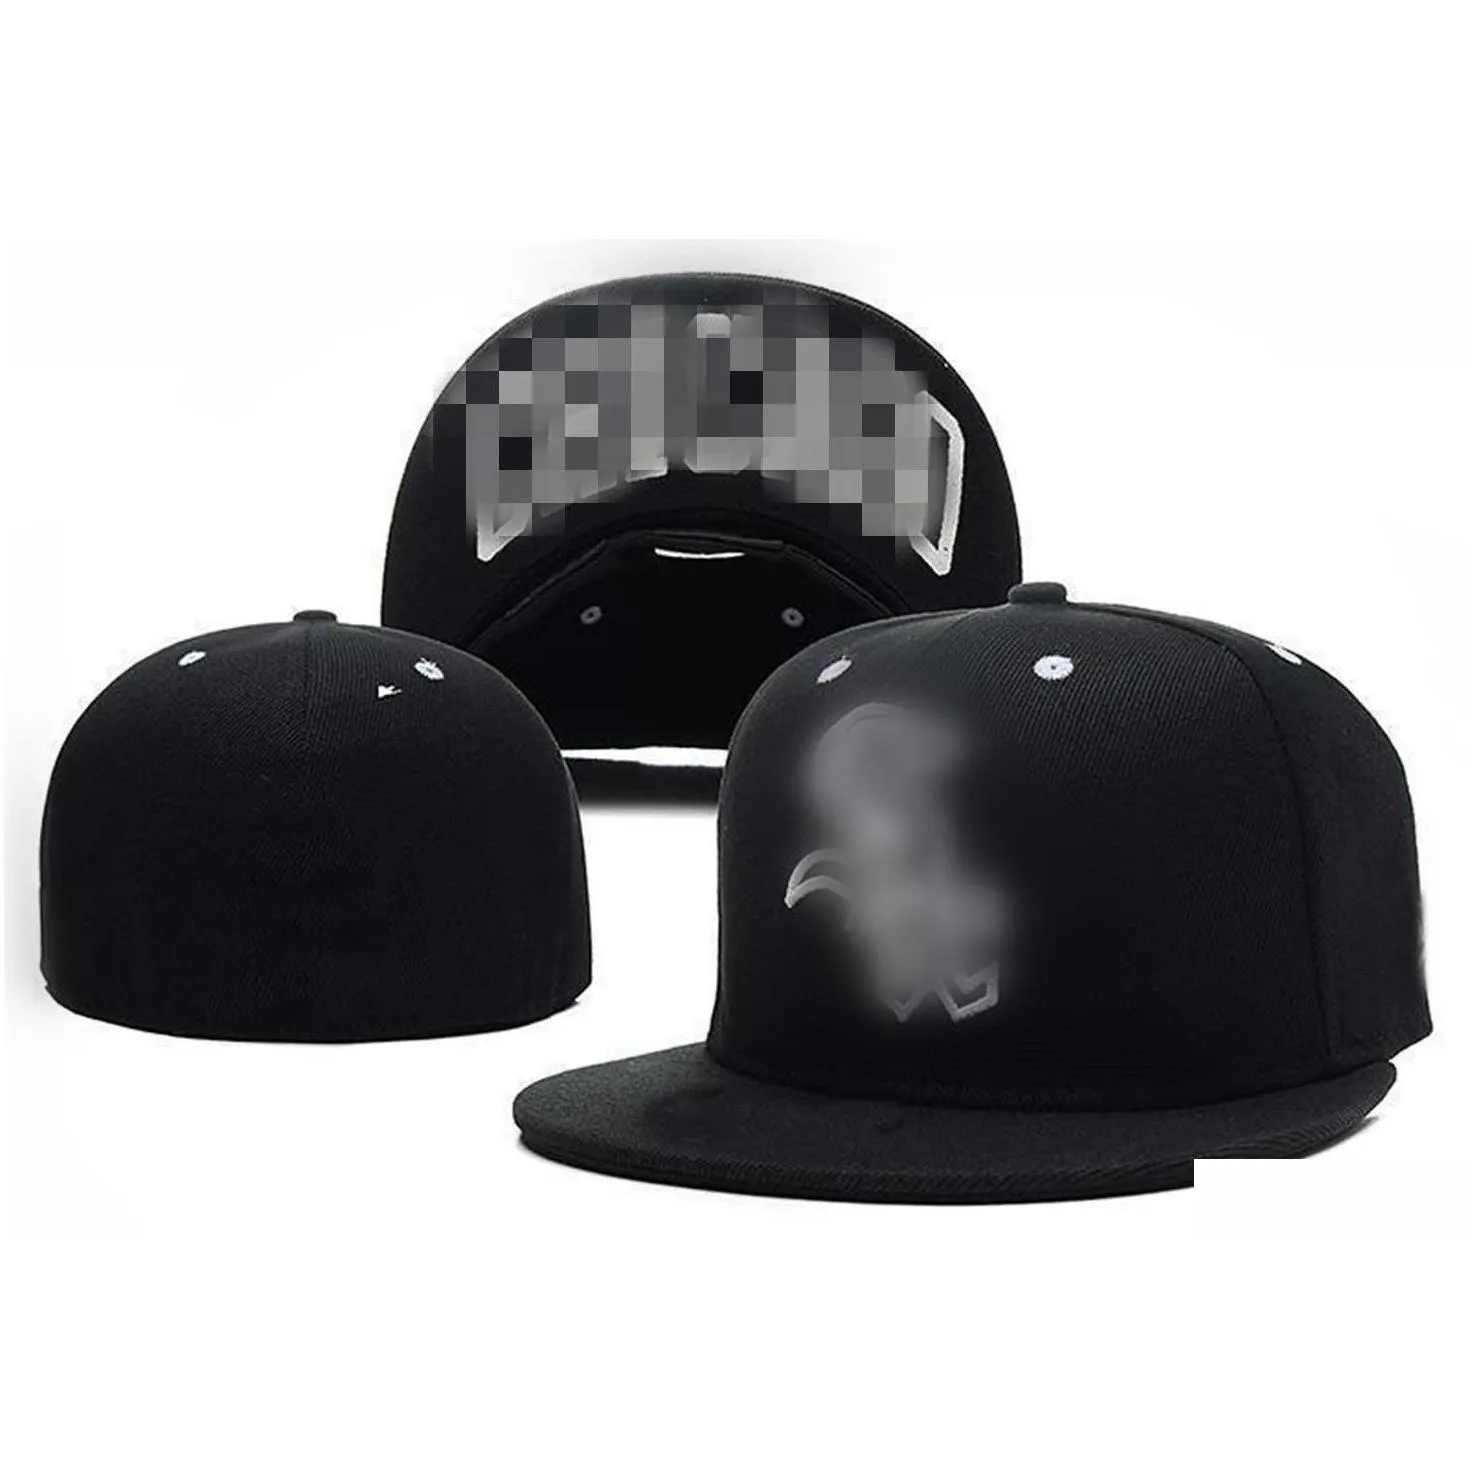 Ball Caps Wholesale White Sox Baseball Caps Women Men Gorras Hip Hop Street Casquette Bone Fitted Hats H2-7.5 Drop Delivery Fashion Ac Dhewb